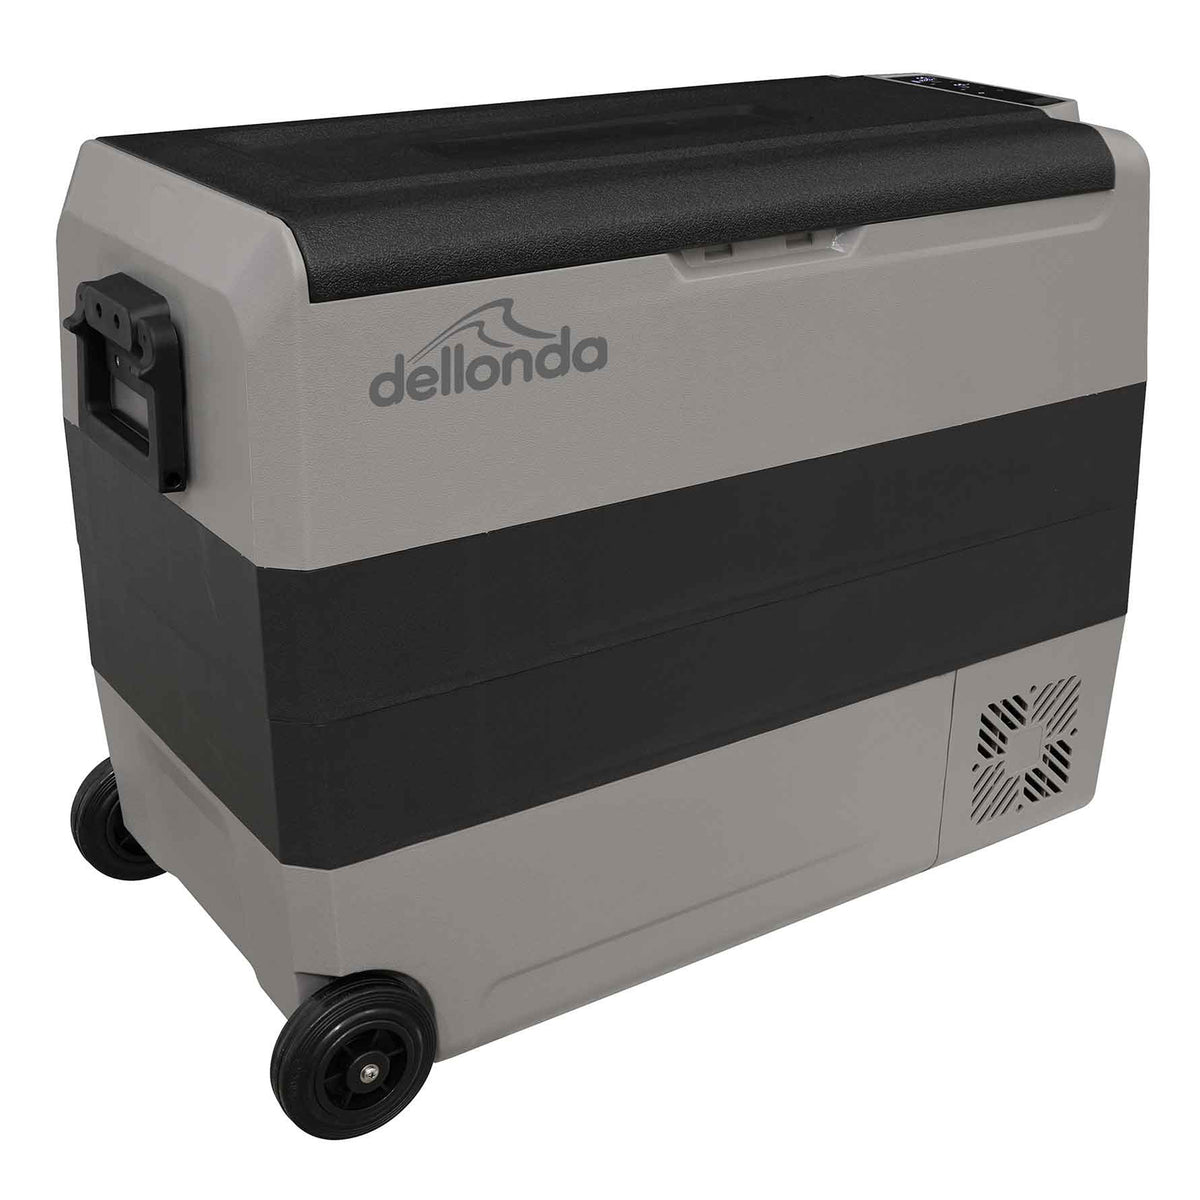 Dellonda 60L Portable Dual Zone Compressor Car Camping Fridge/Freezer